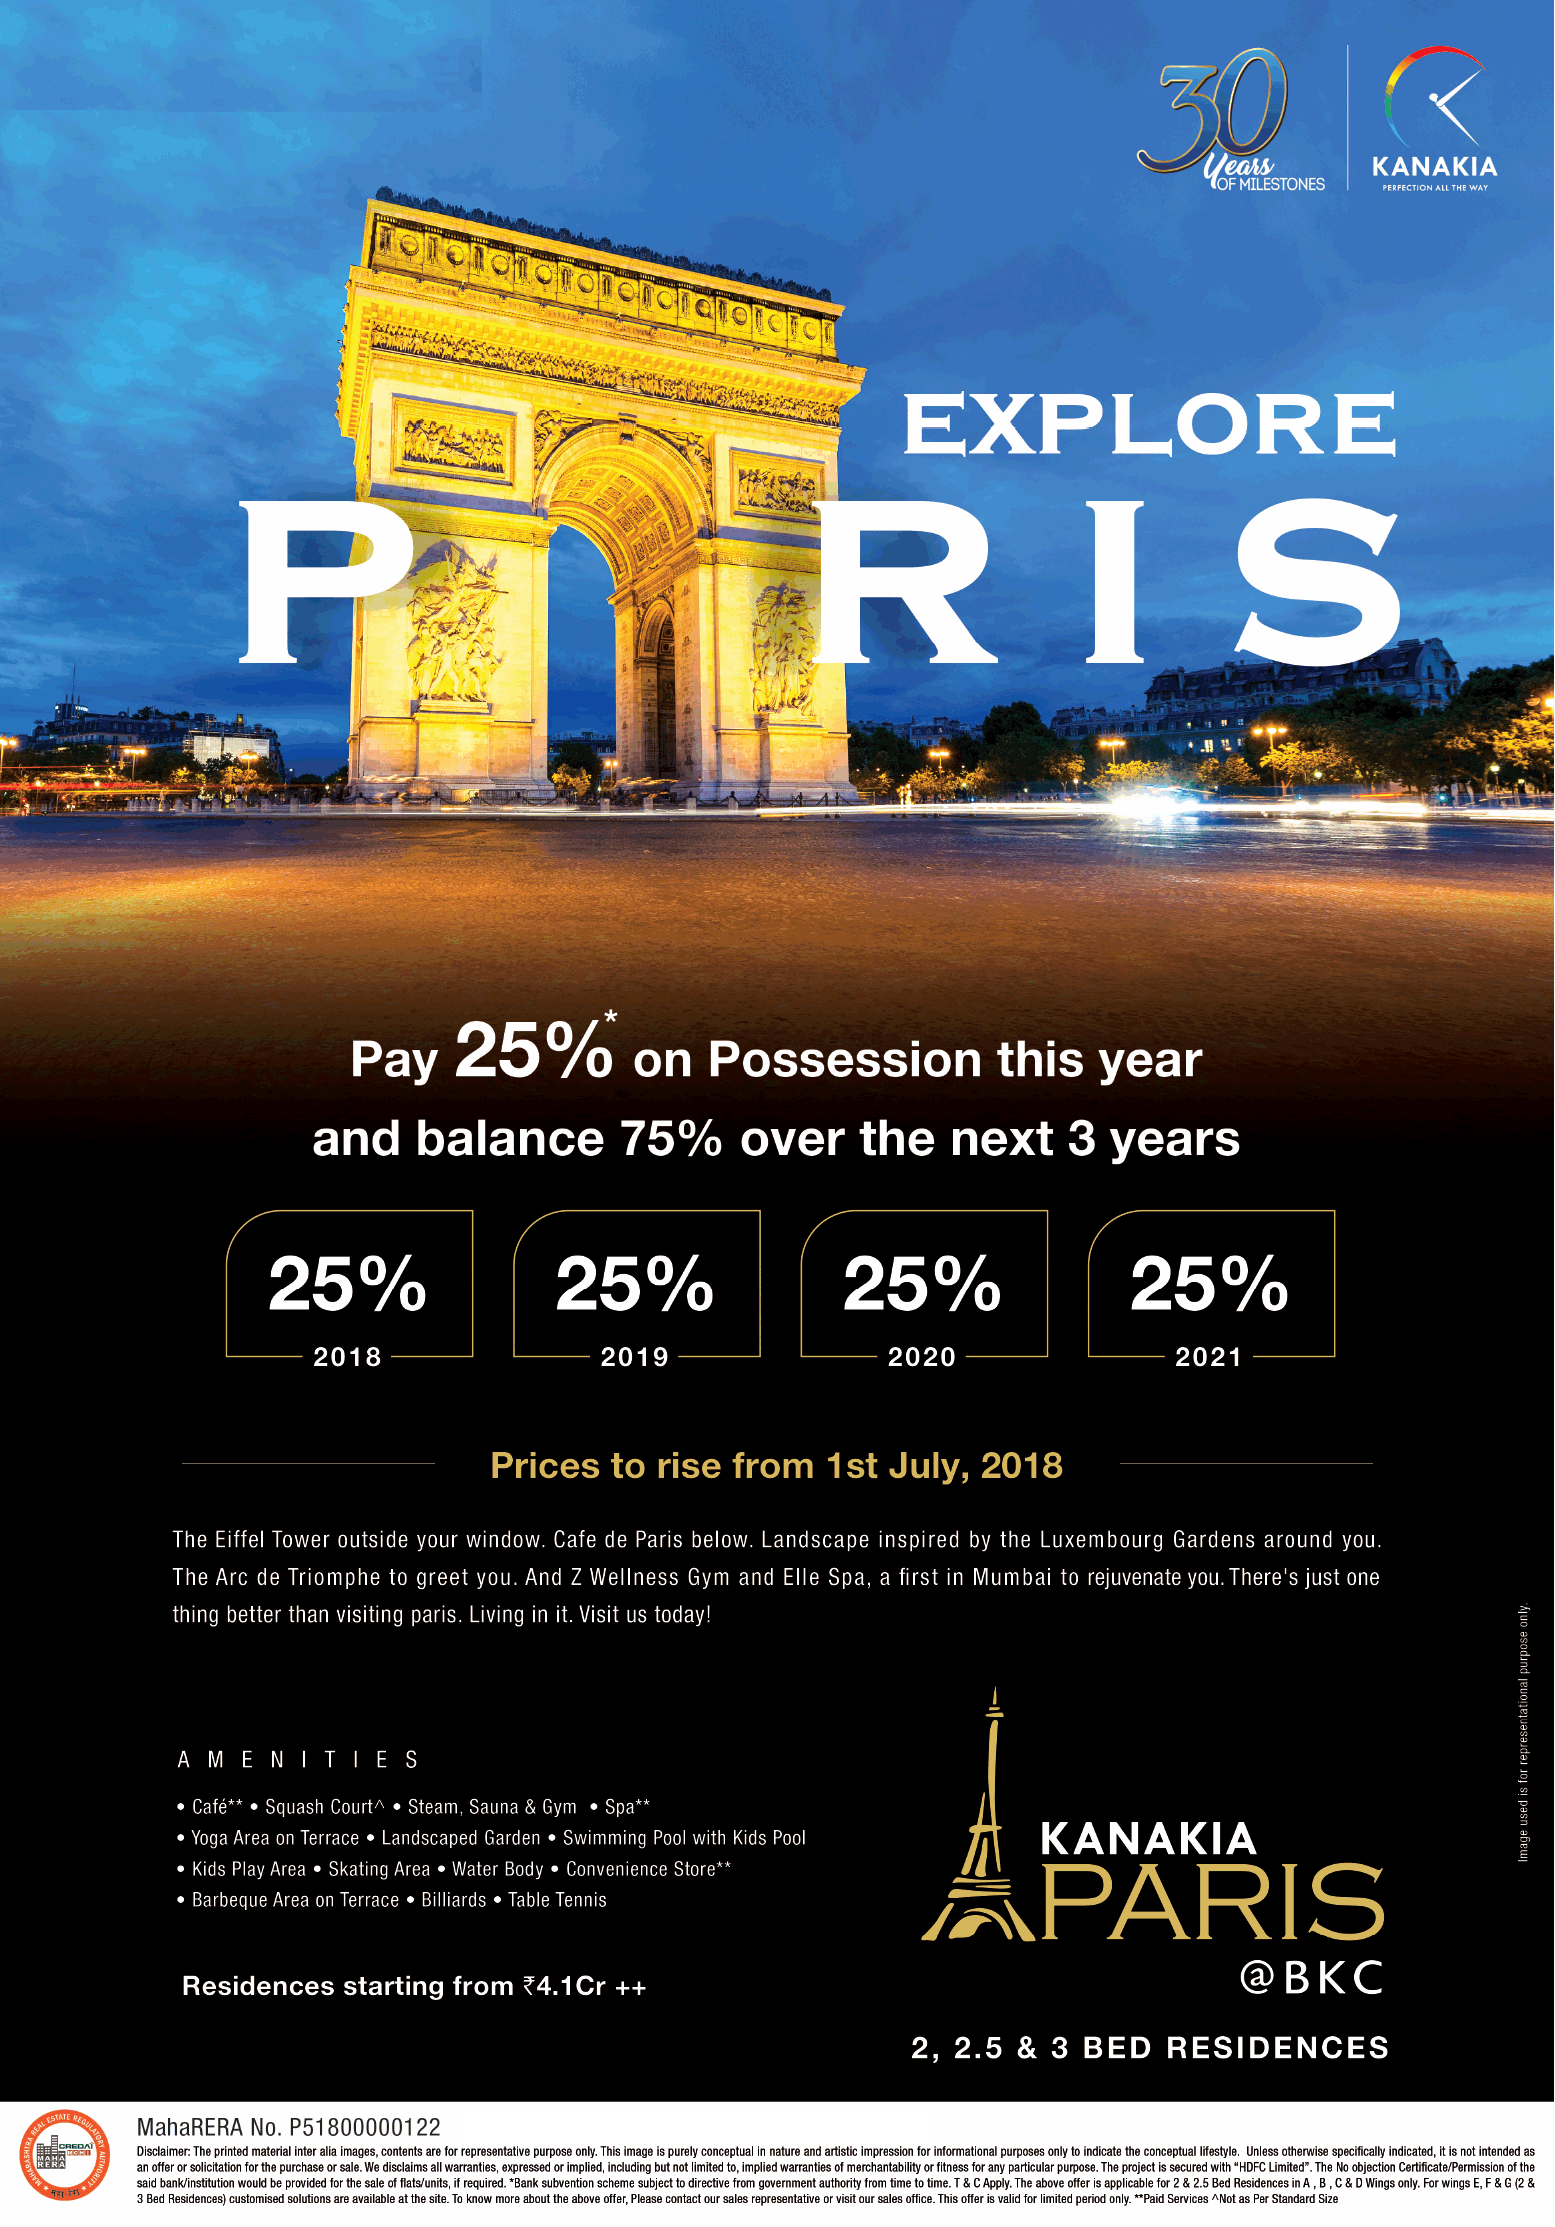 Pay 25% on Possession this year & balance 75% over the next 3 years at Kanakia Paris in Mumbai Update